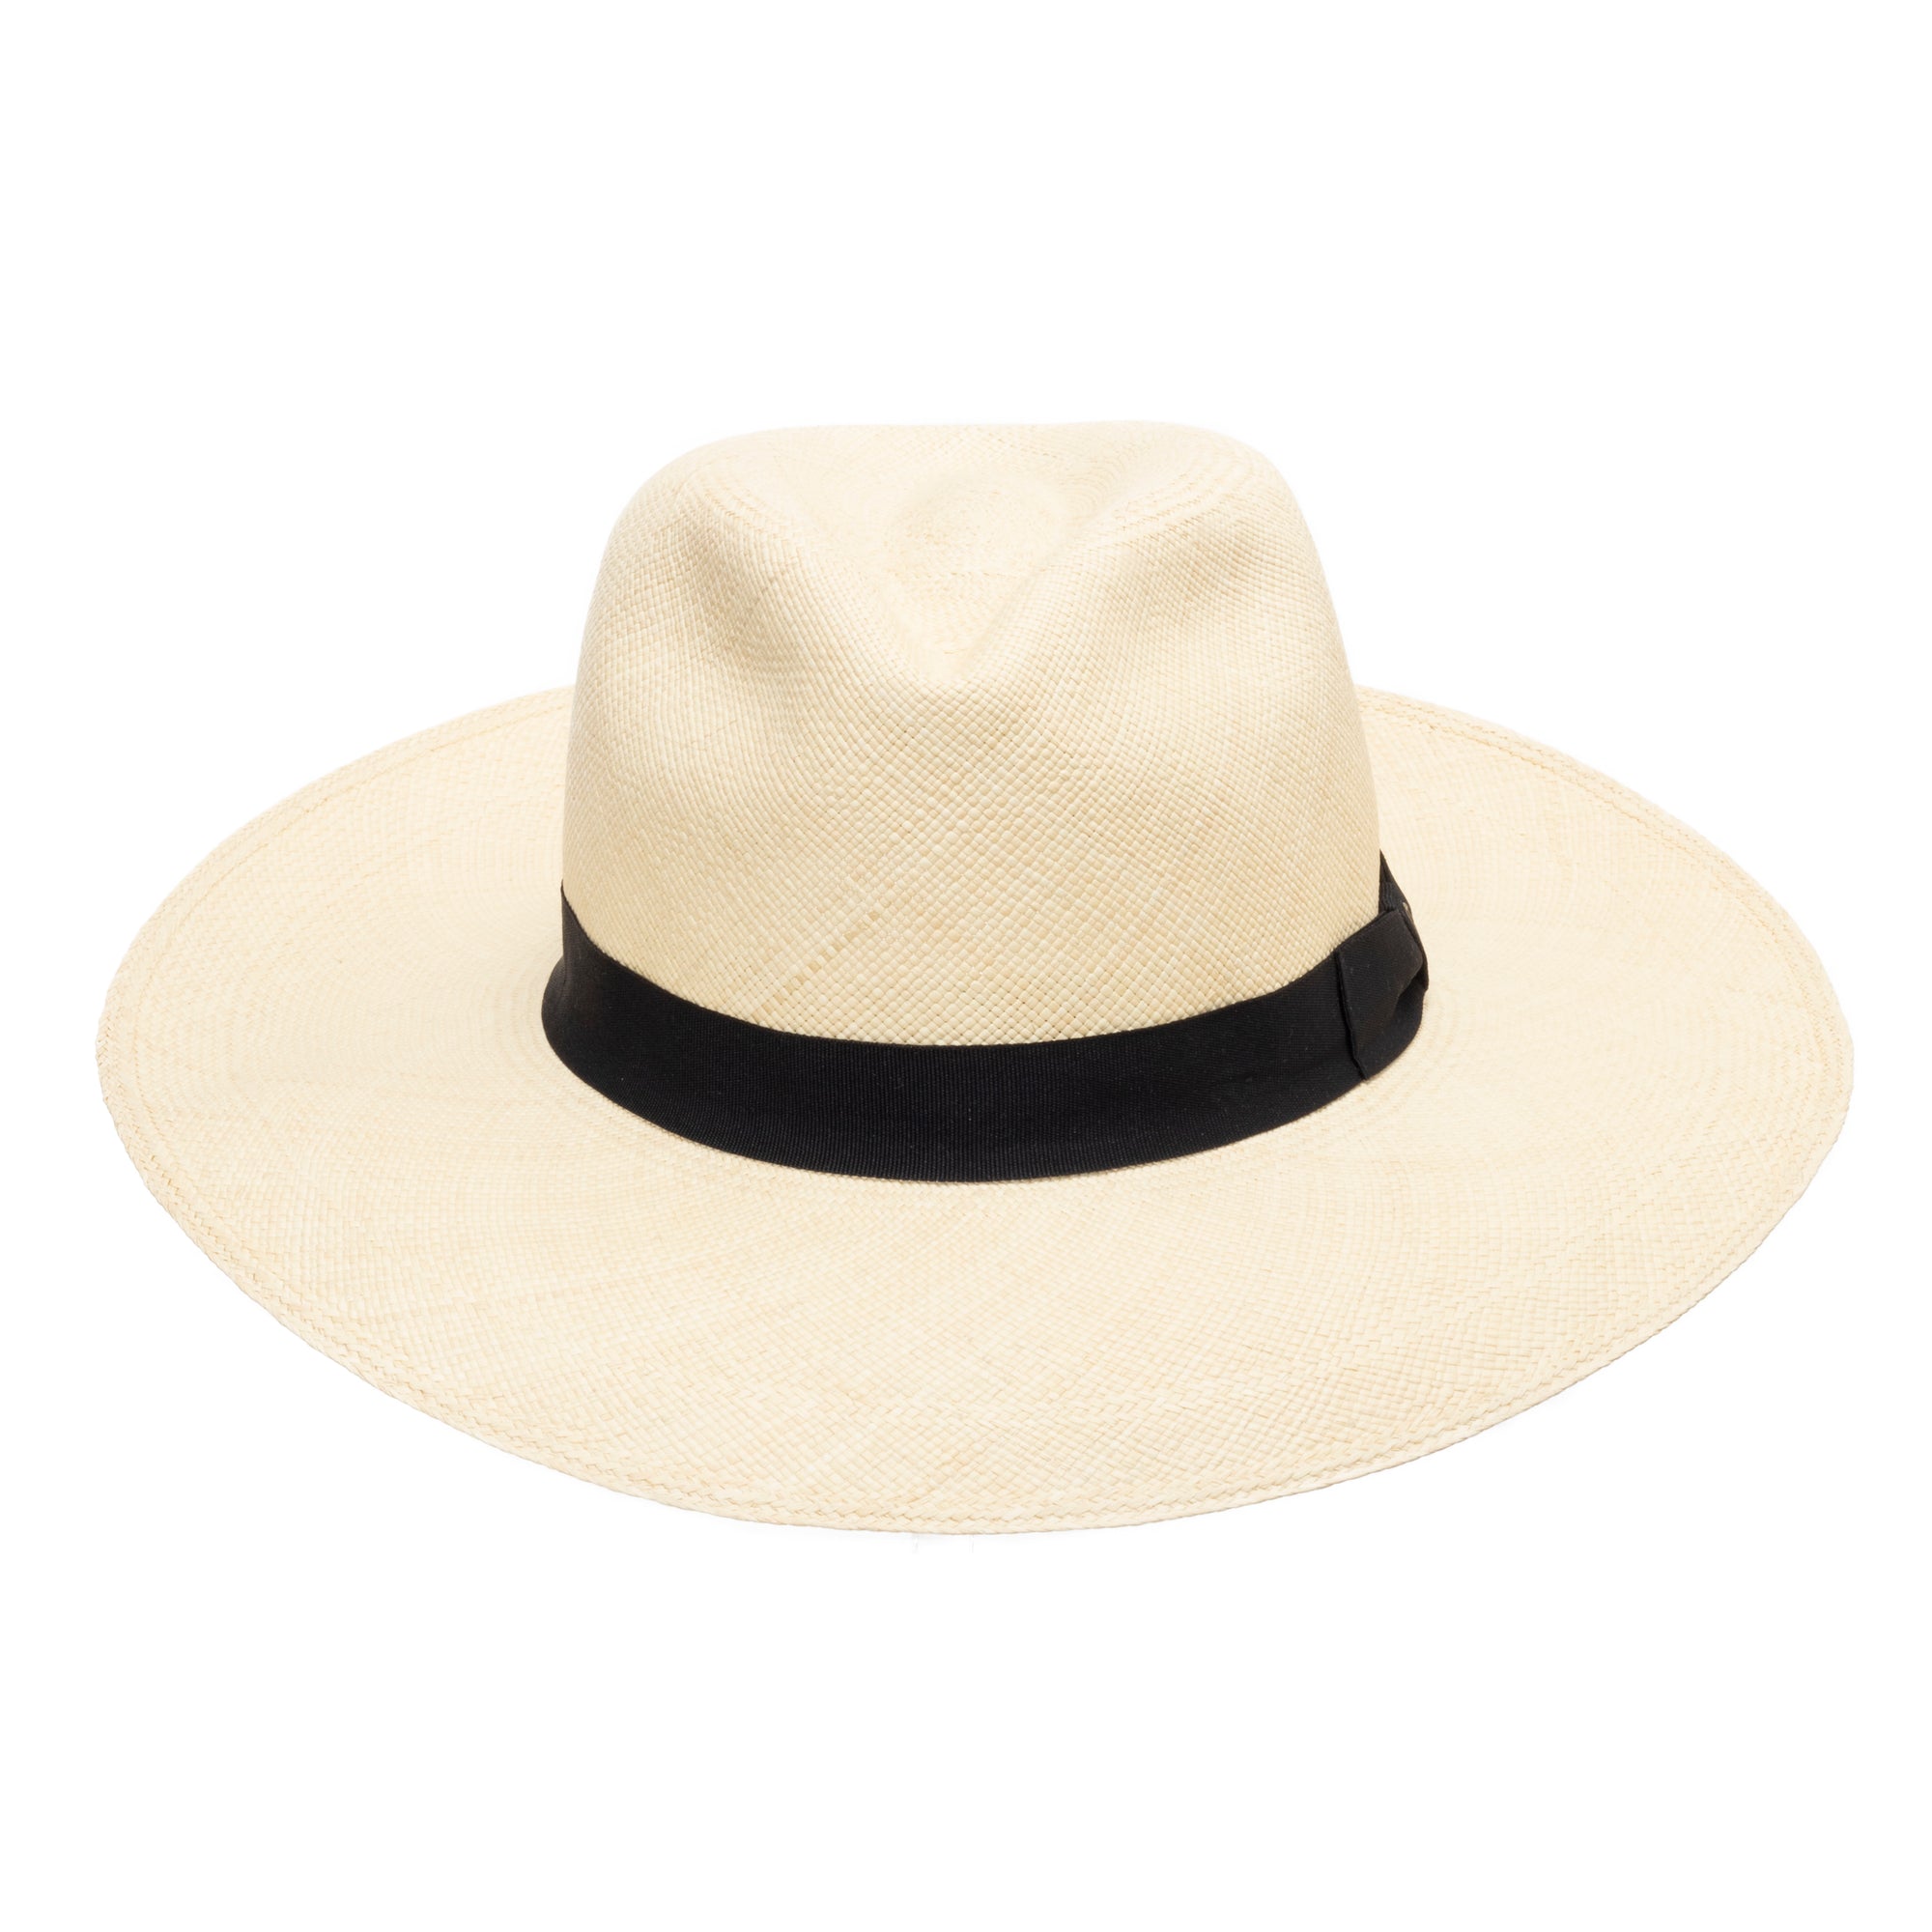 Mad Hatter Straw Top Hat, Black Straw Top Hat, Black Top Hat, Black Straw  Top Hat, Big Straw Top Hat, Amazing Black Straw Hat 